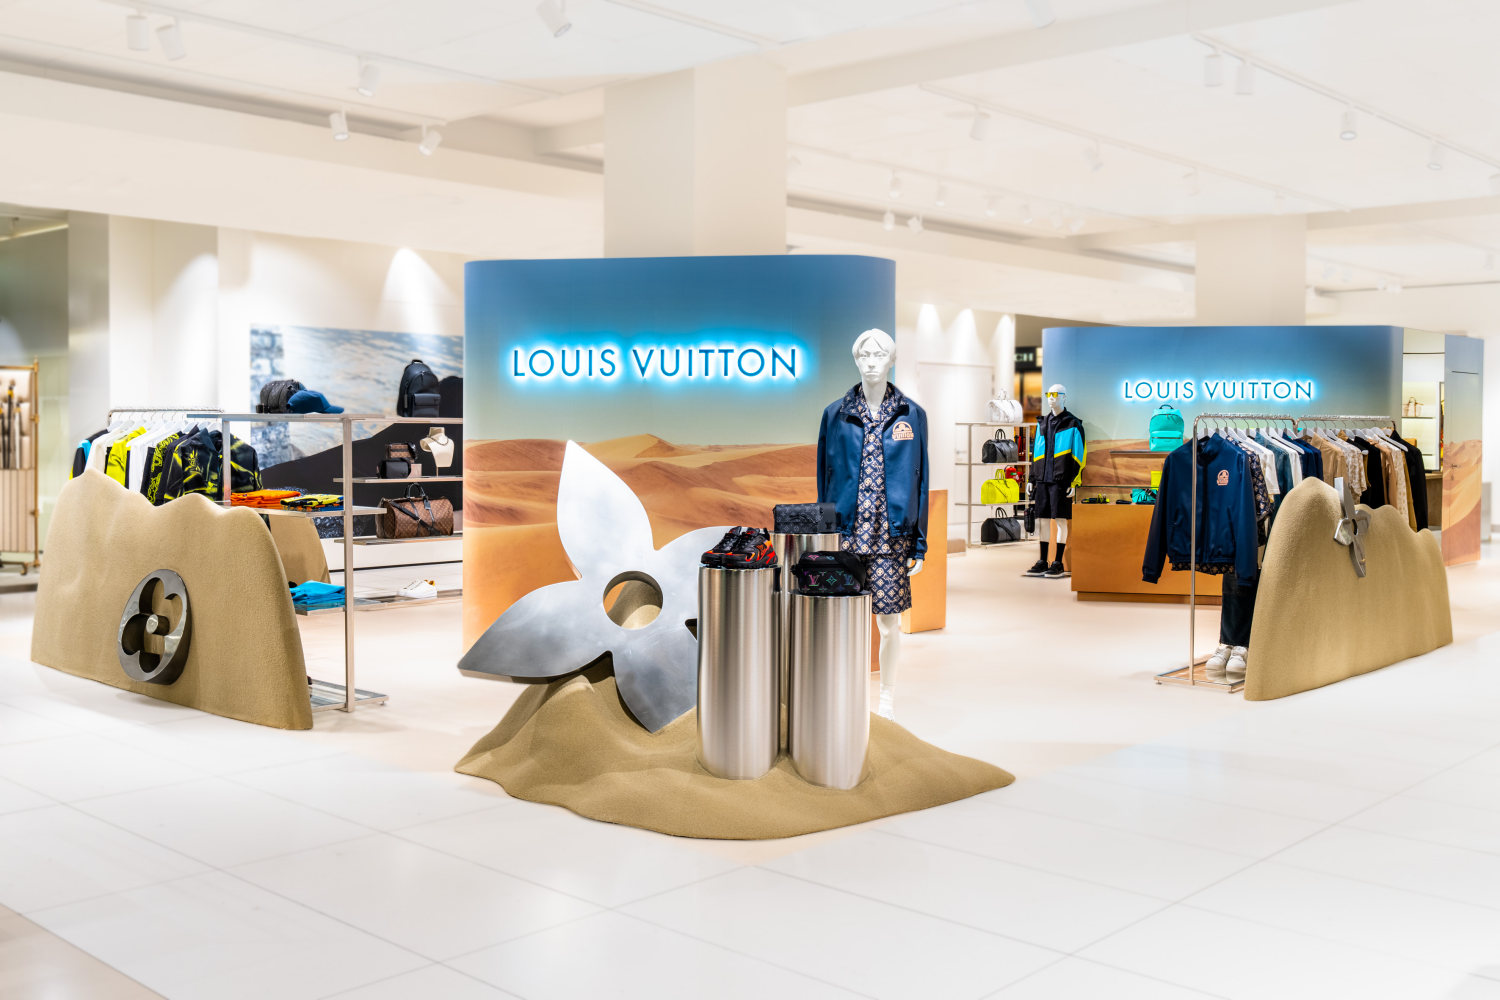 Amsterdam Netherlands October 2021 Store Front Louis Vuitton